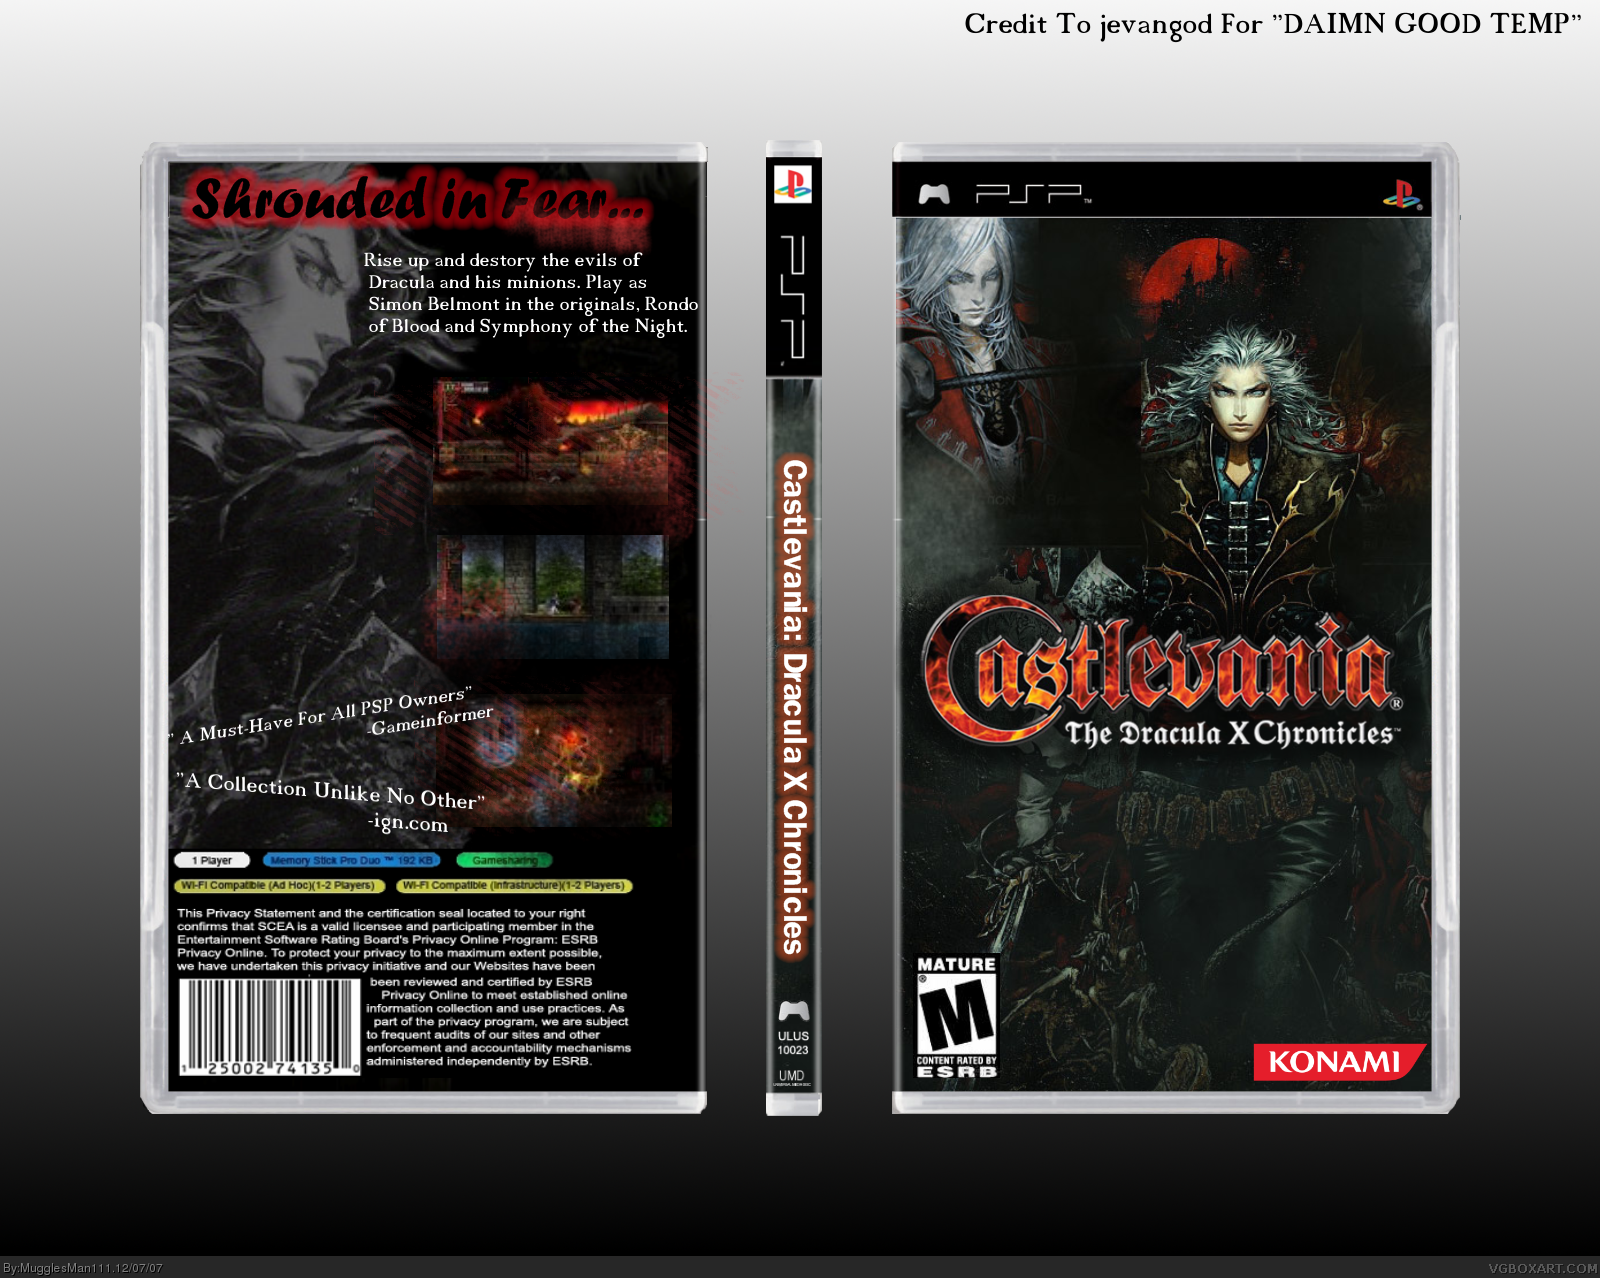 Castlevania: The Dracula X Chronicles box cover